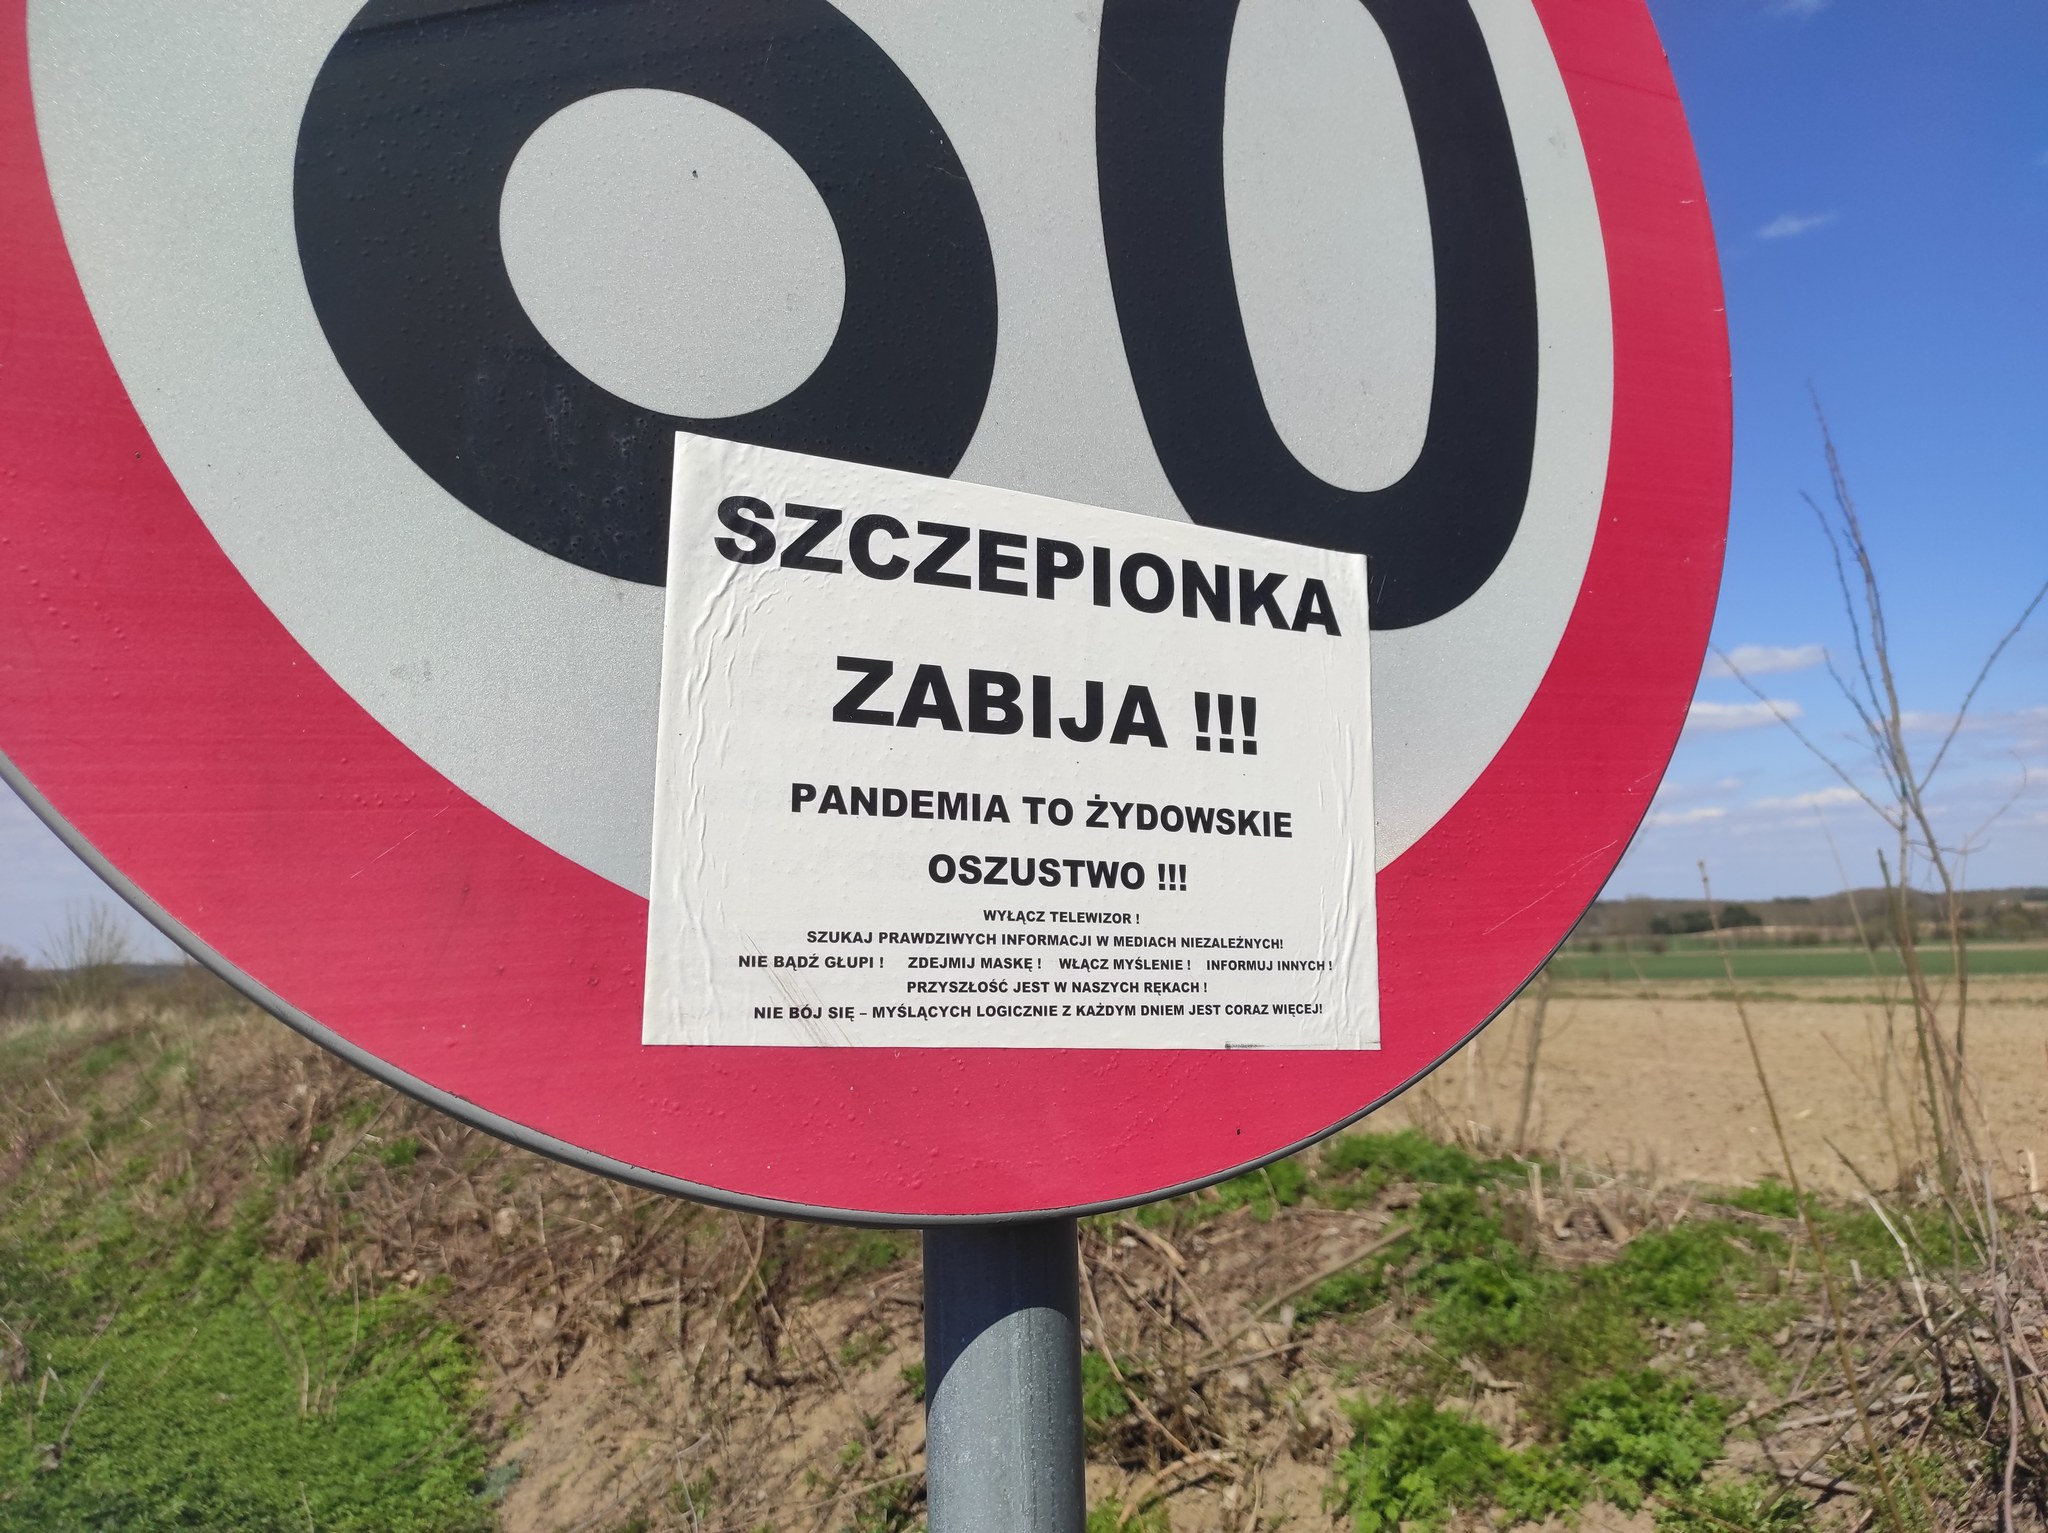 una pegatina que dice "la vacuna mata" en Polonia